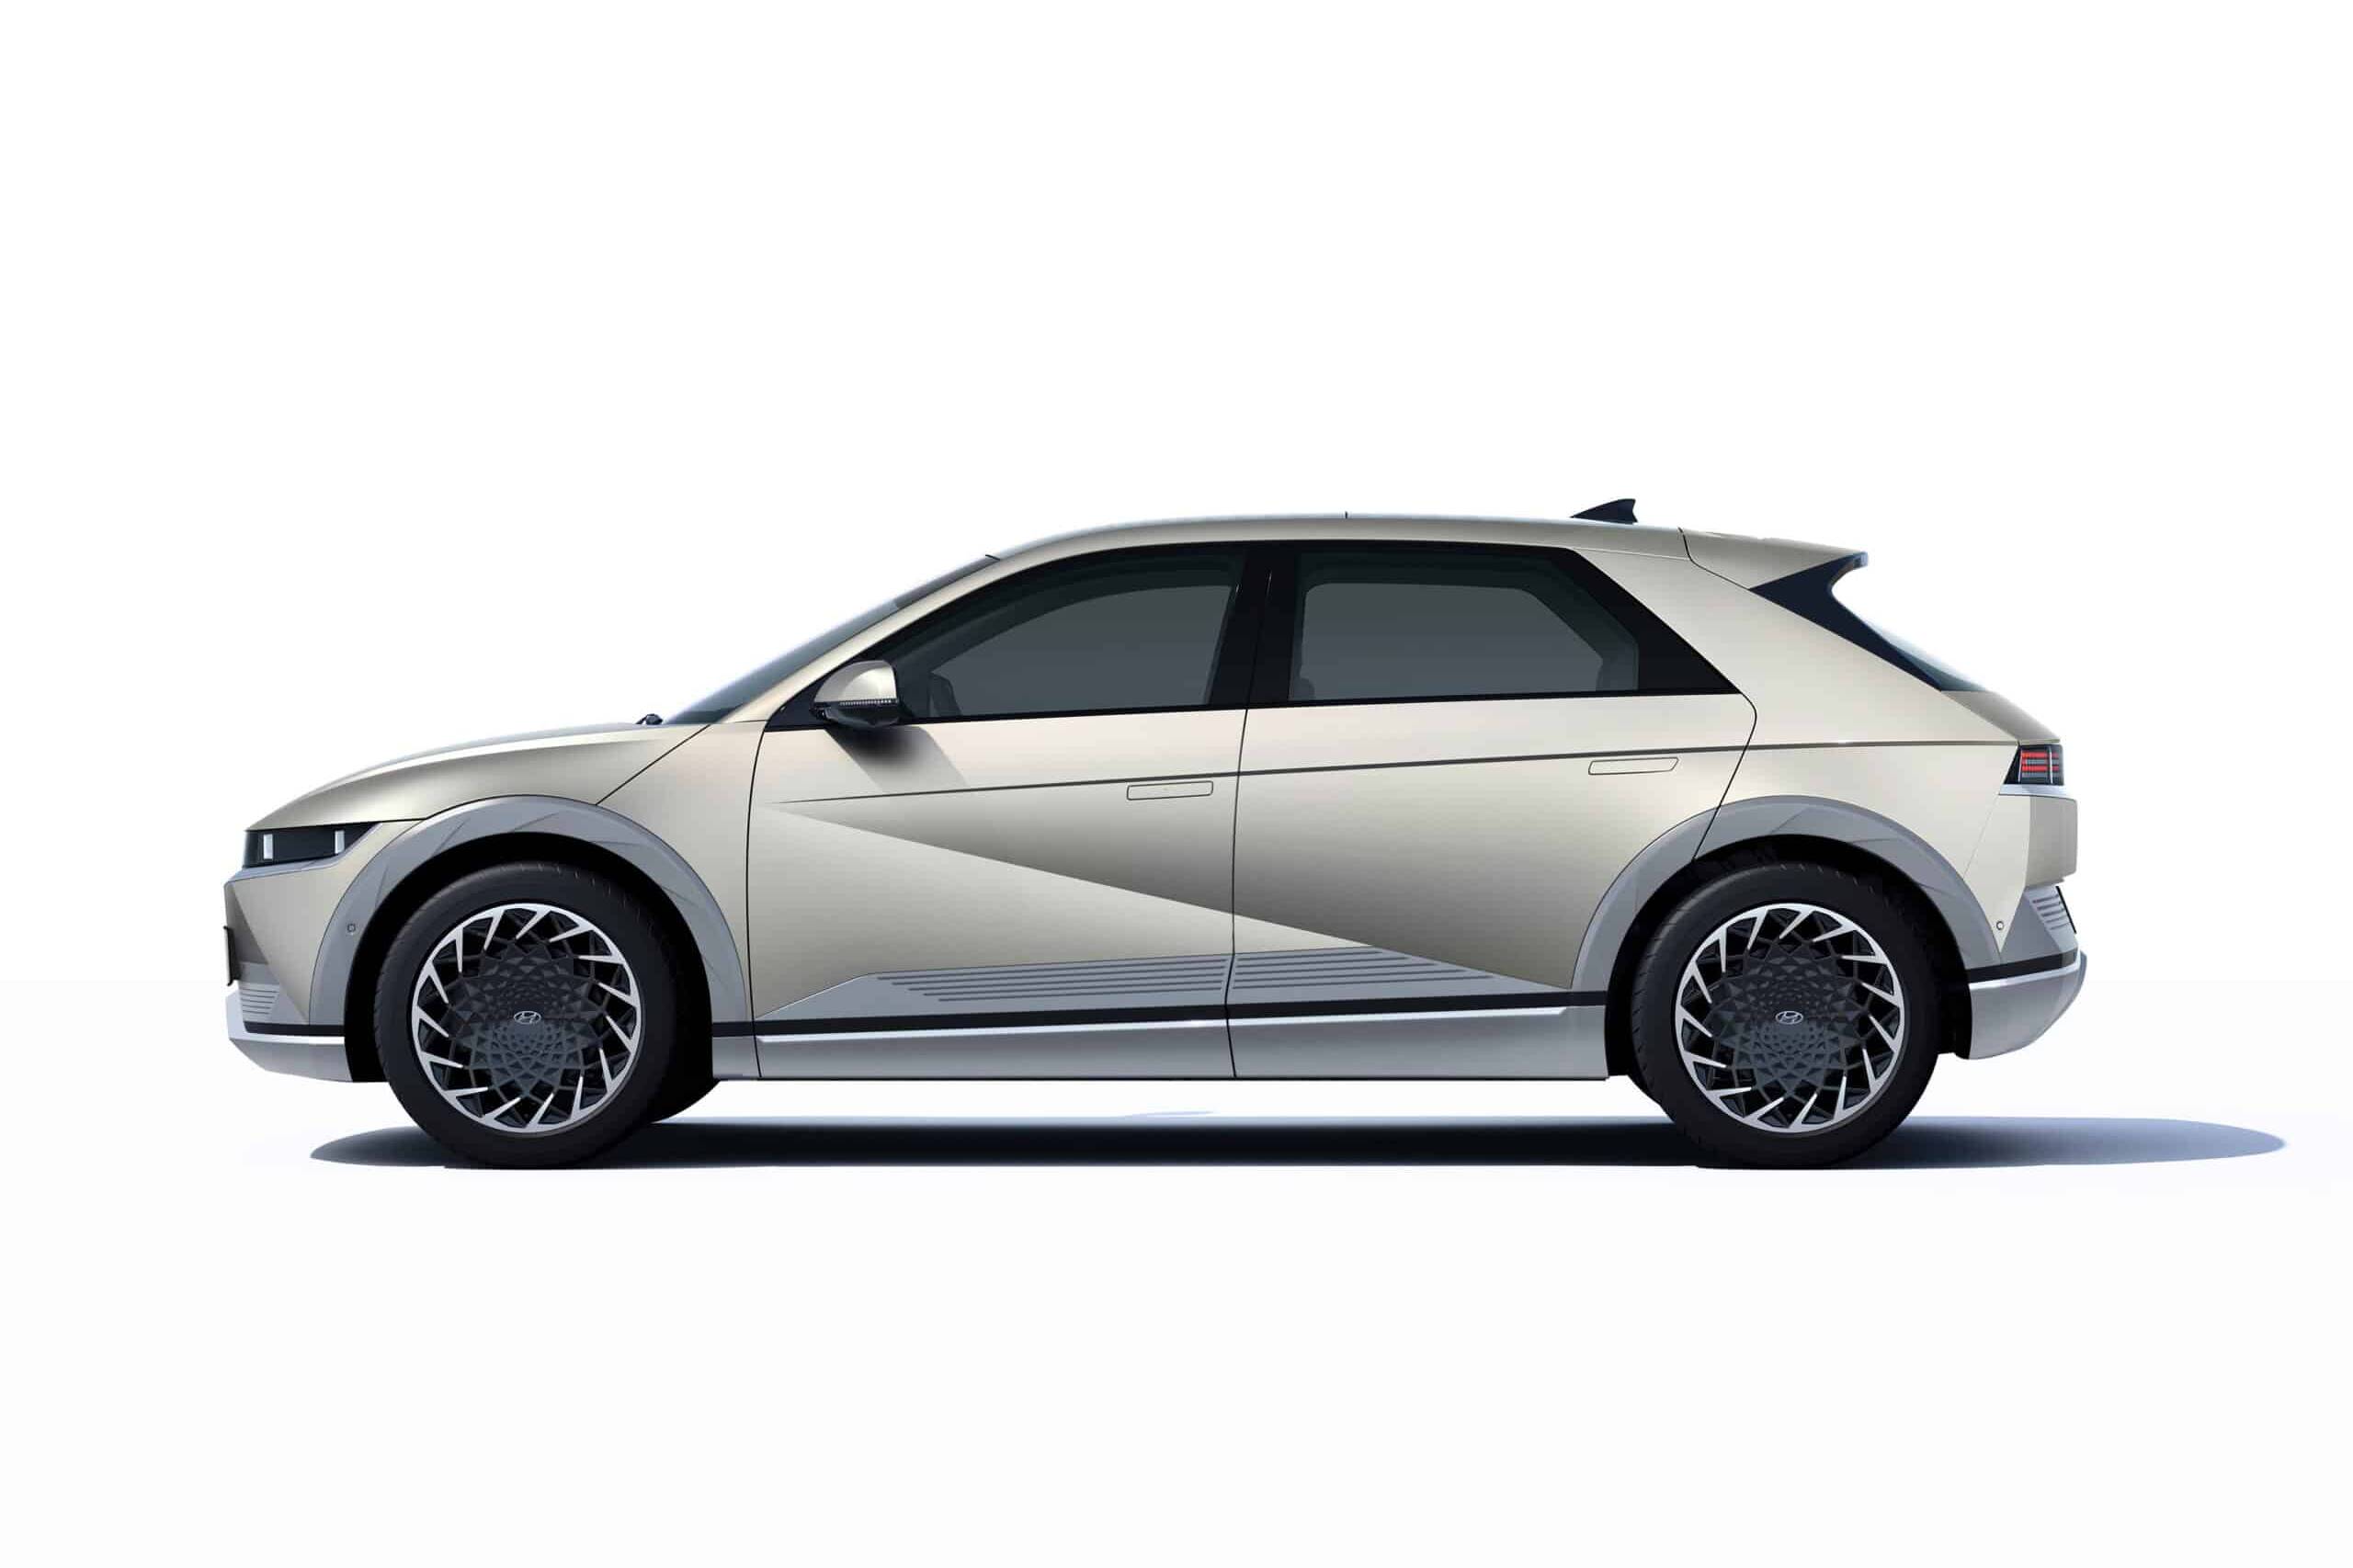 Preise des neuen Hyundai Ioniq beginnen bei 41.900 Euro